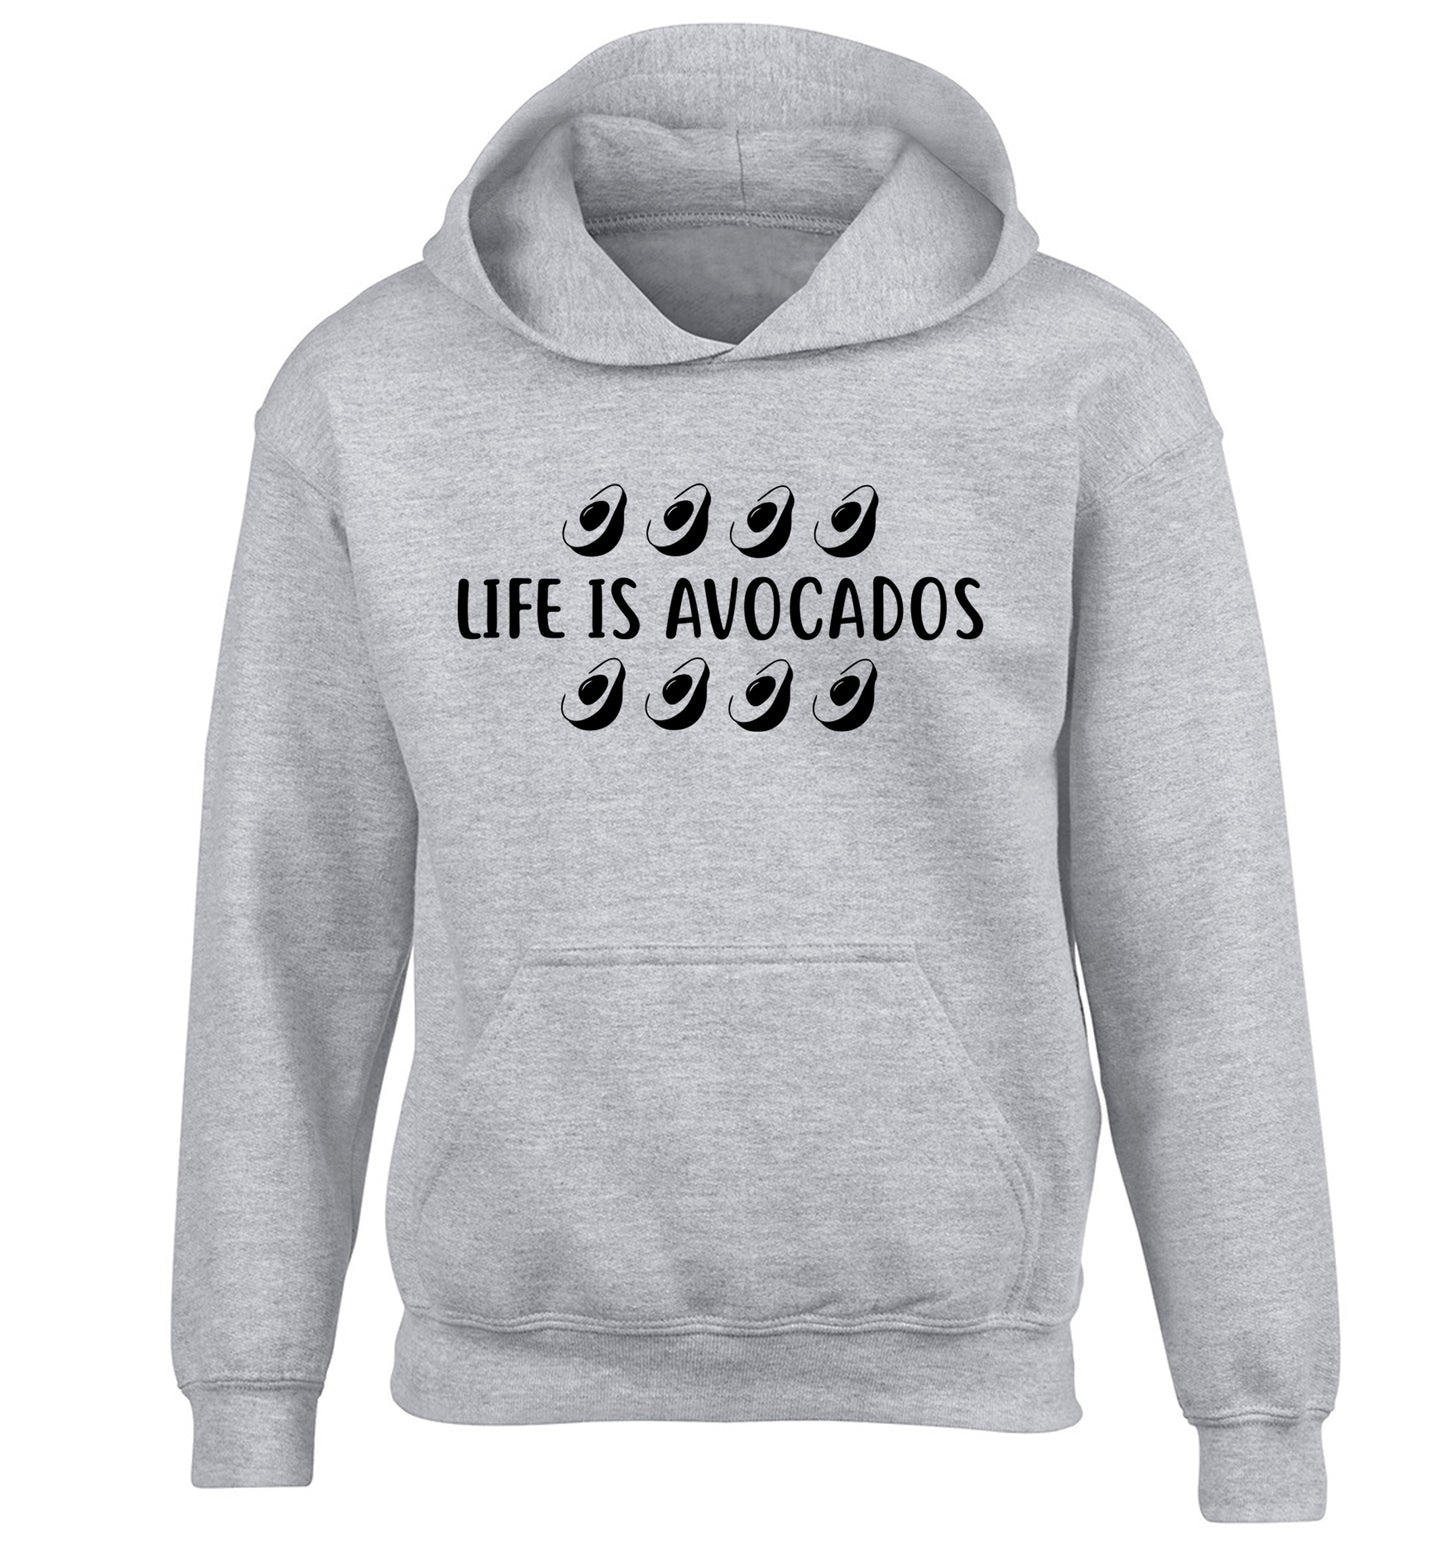 Life is avocados children's grey hoodie 12-14 Years